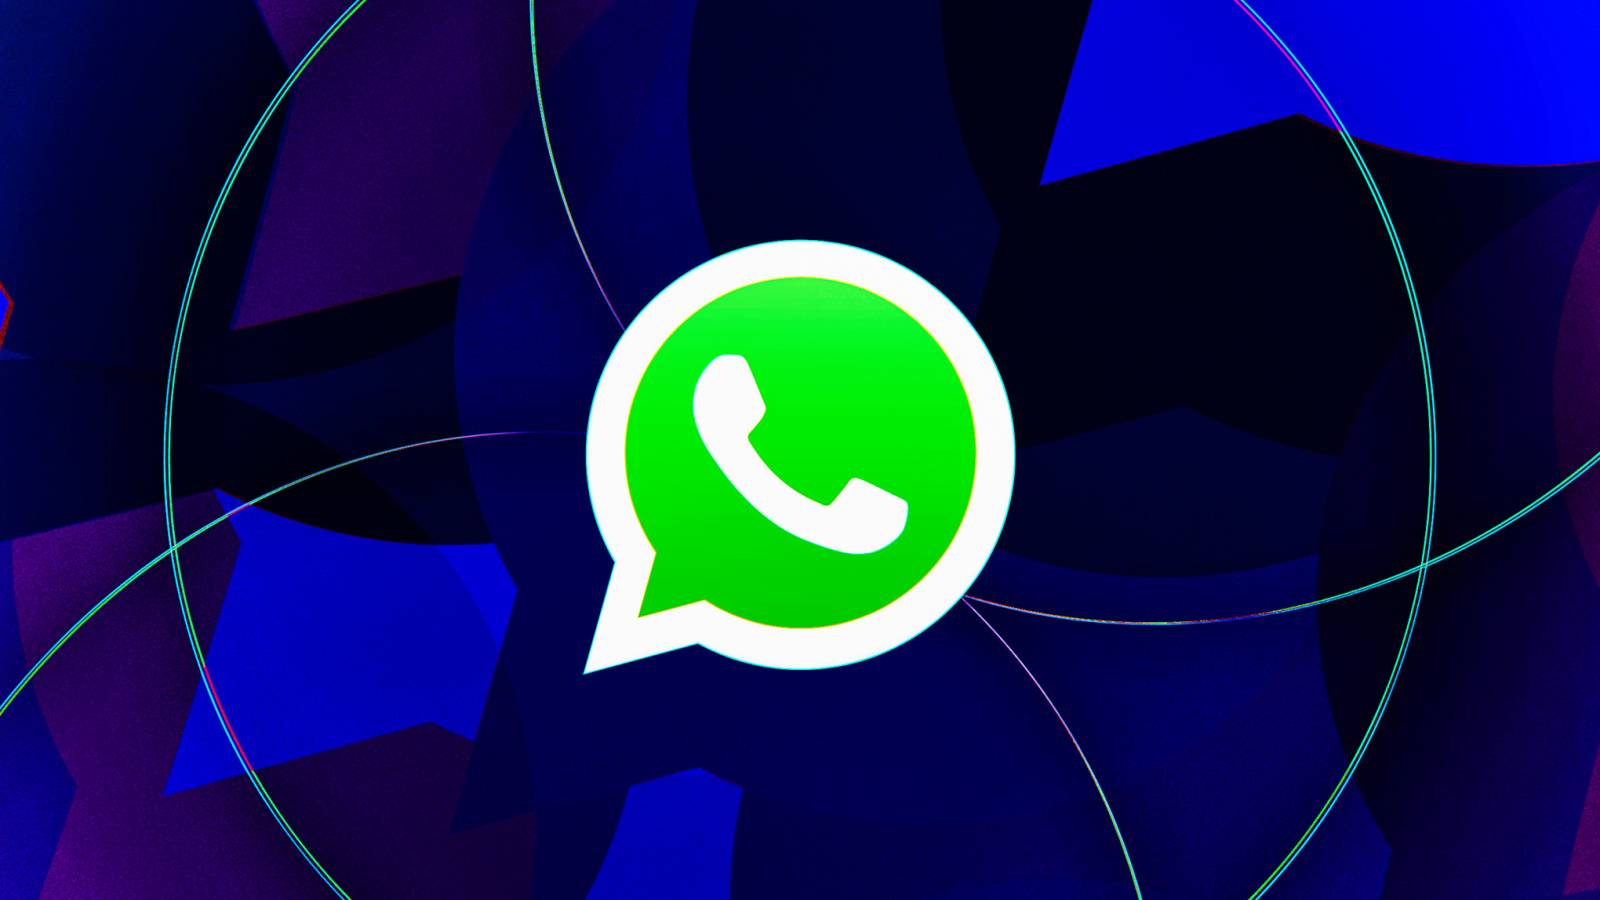 WhatsApp Importanta Schimbare OFICIALA Lansata iPhone Android